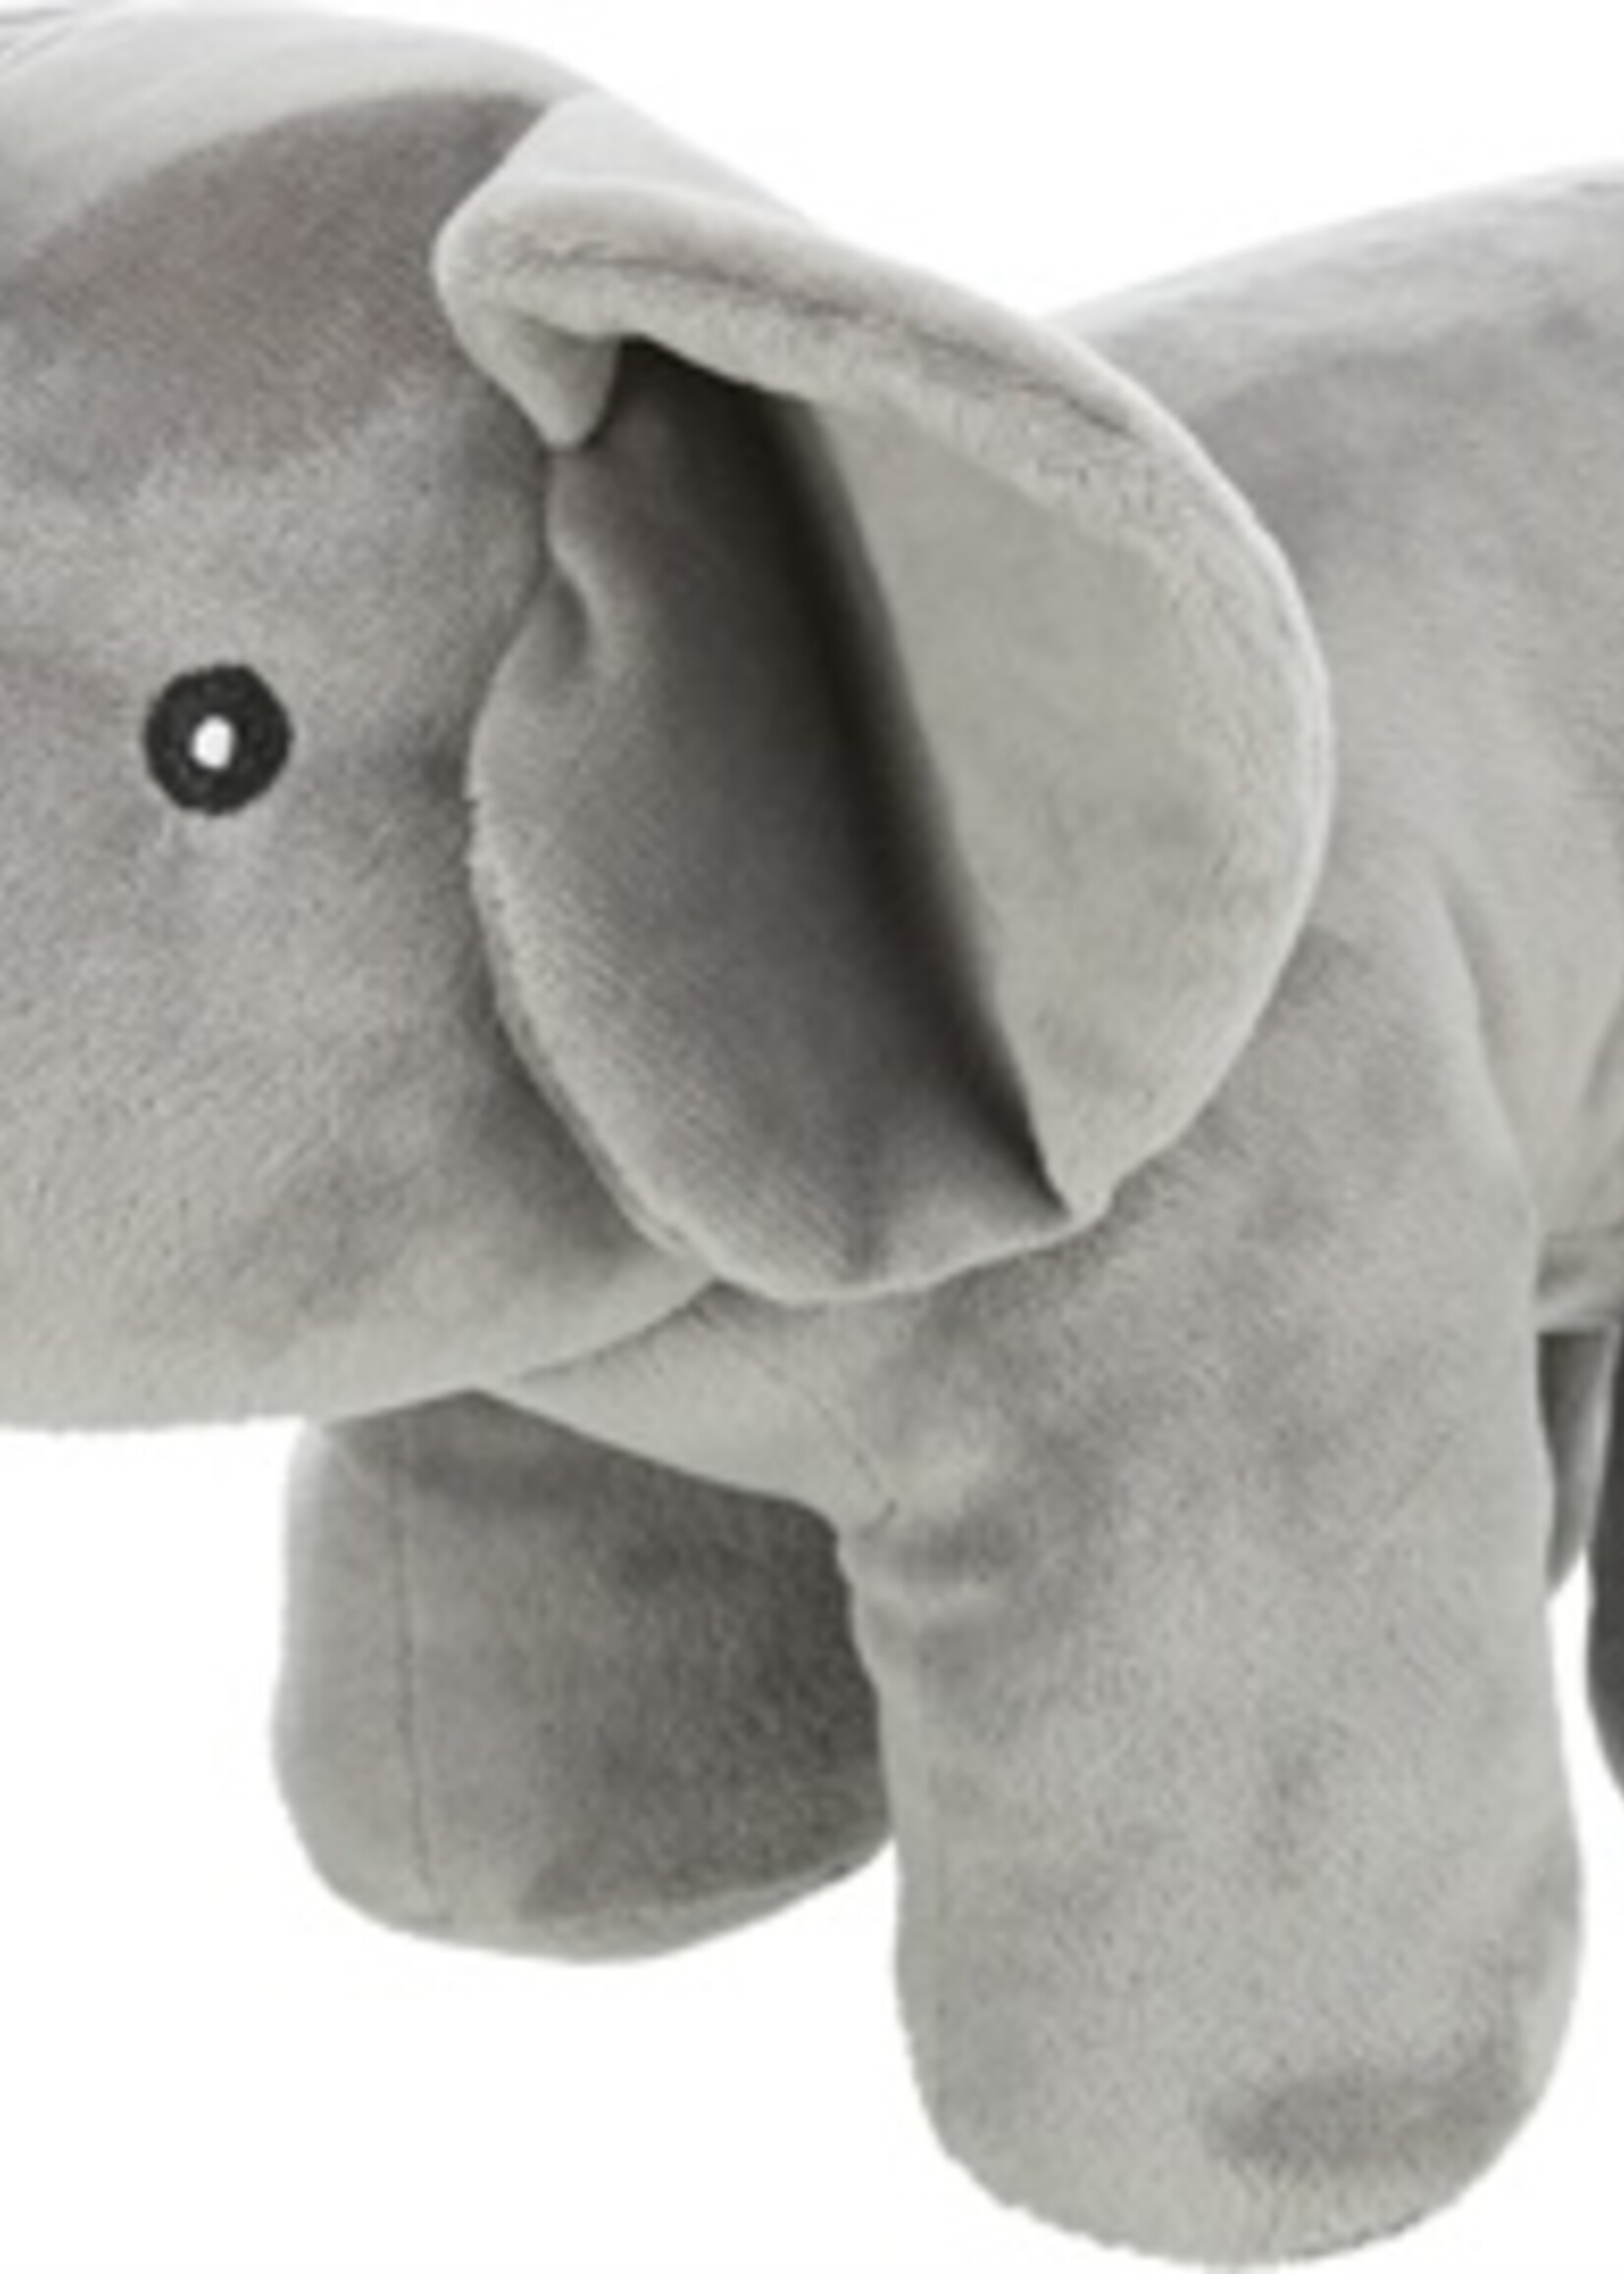 Trixie Trixie pluche olifant